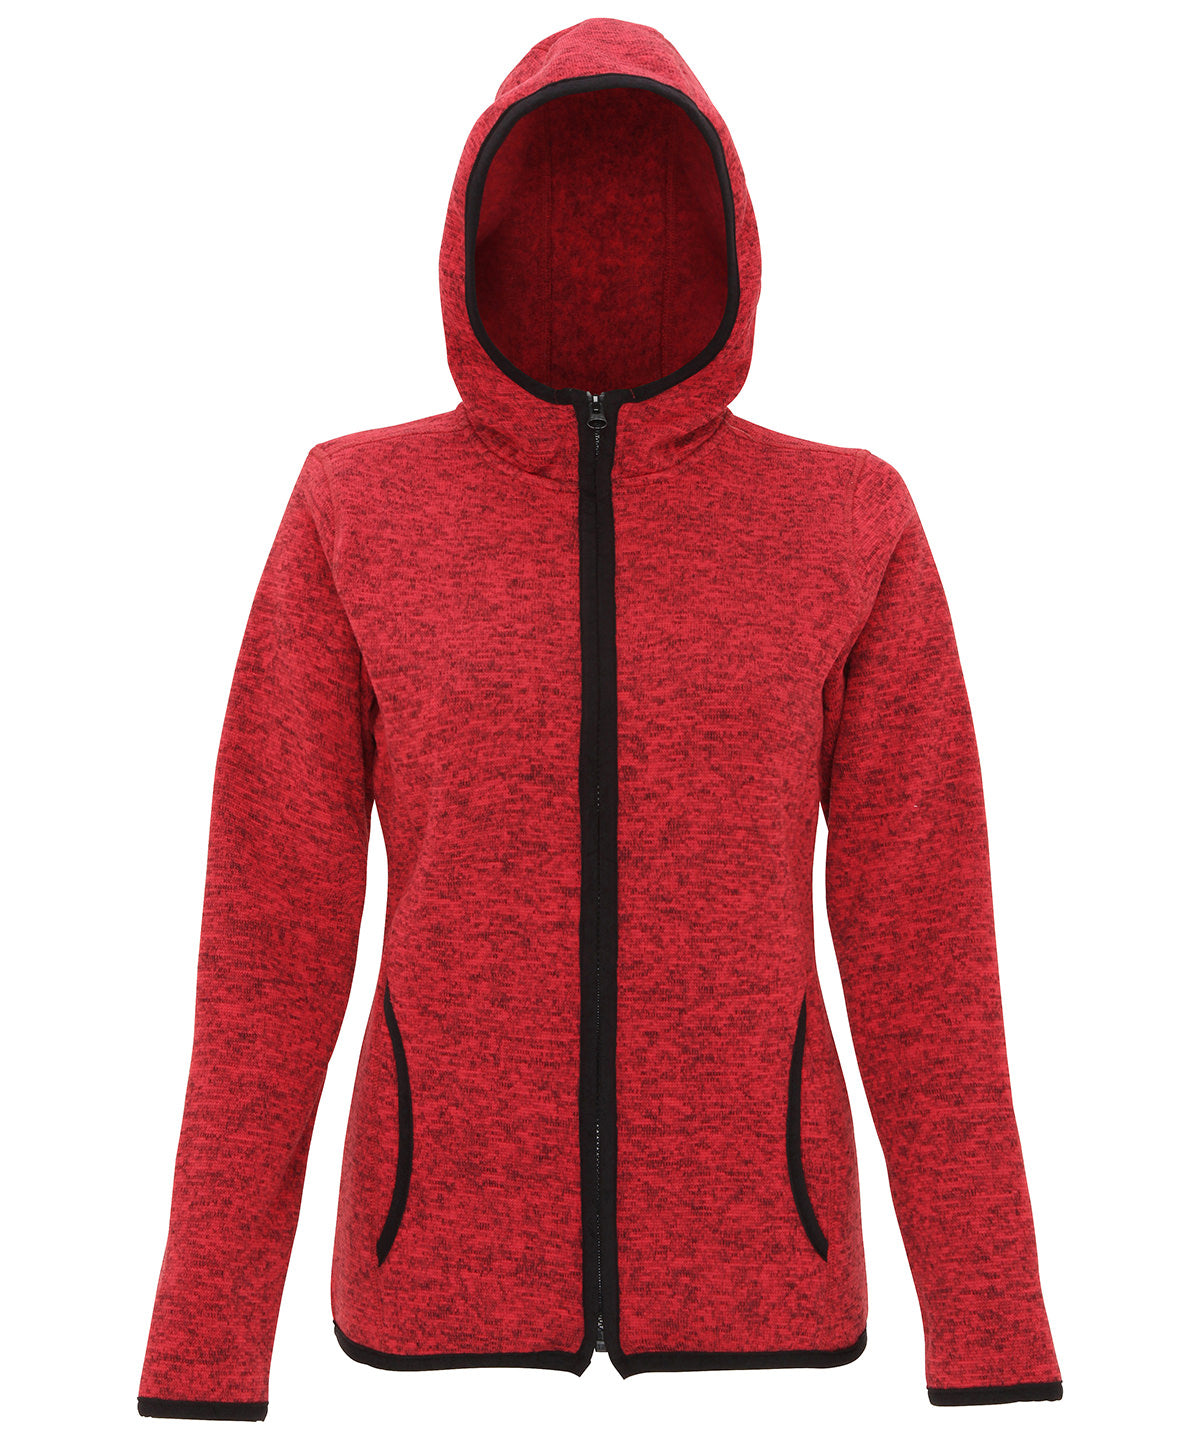 Fire Red/Black Fleck - Women's TriDri® melange knit fleece jacket Jackets TriDri® Activewear & Performance, Athleisurewear, Exclusives, Outdoor Sports, Rebrandable, Sports & Leisure Schoolwear Centres